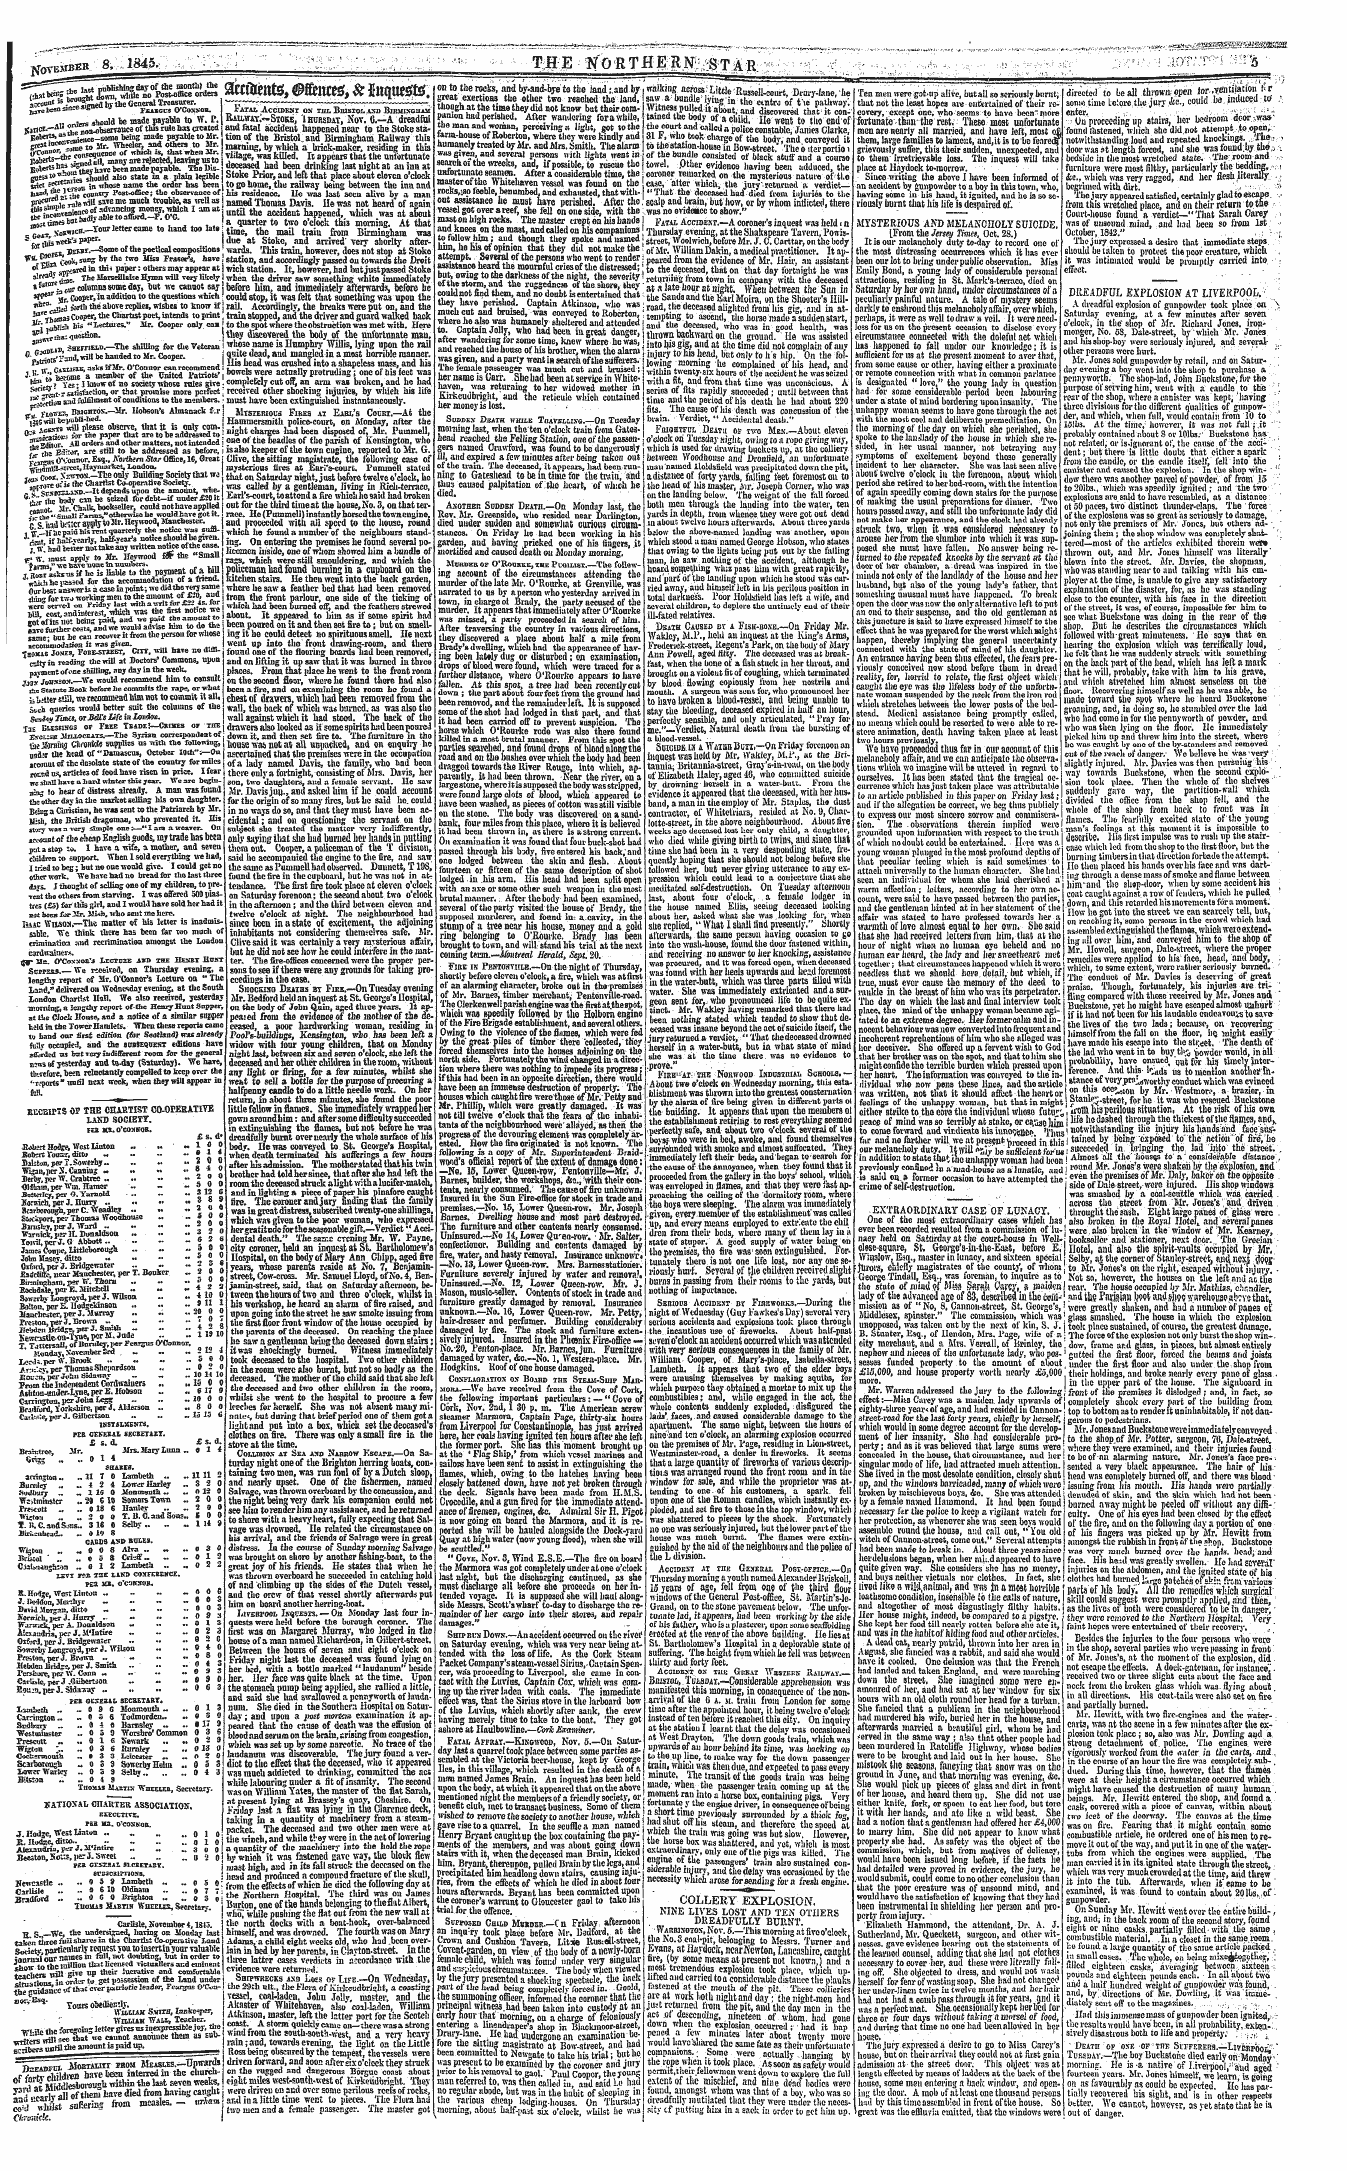 Northern Star (1837-1852): jS F Y, 3rd edition - _, ,. Espences O 0 O Balance 0 0 0 1 He ...